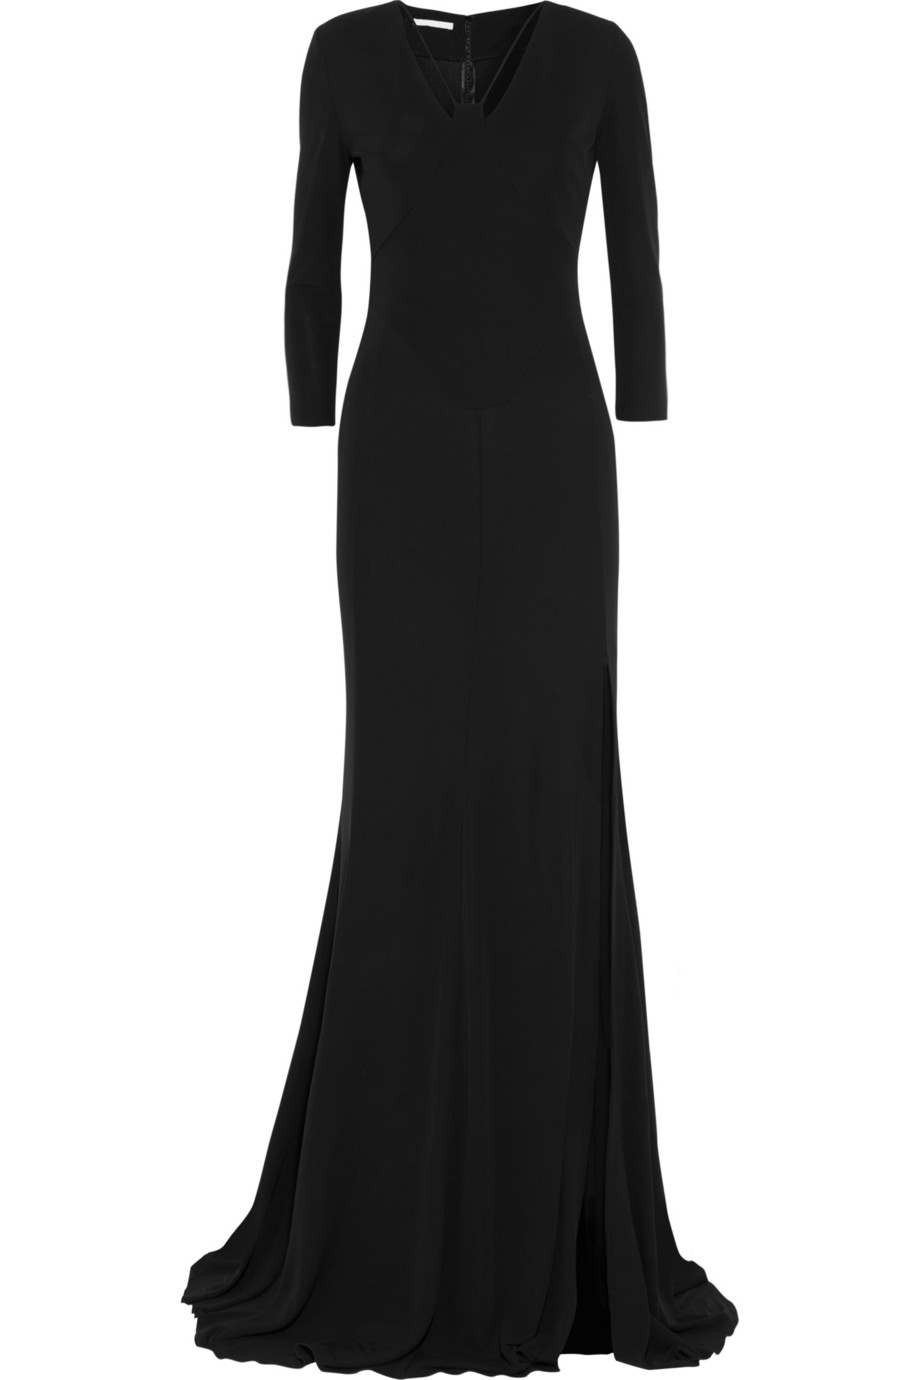 Antonio berardi Crepe Jersey Gown in Black | Lyst